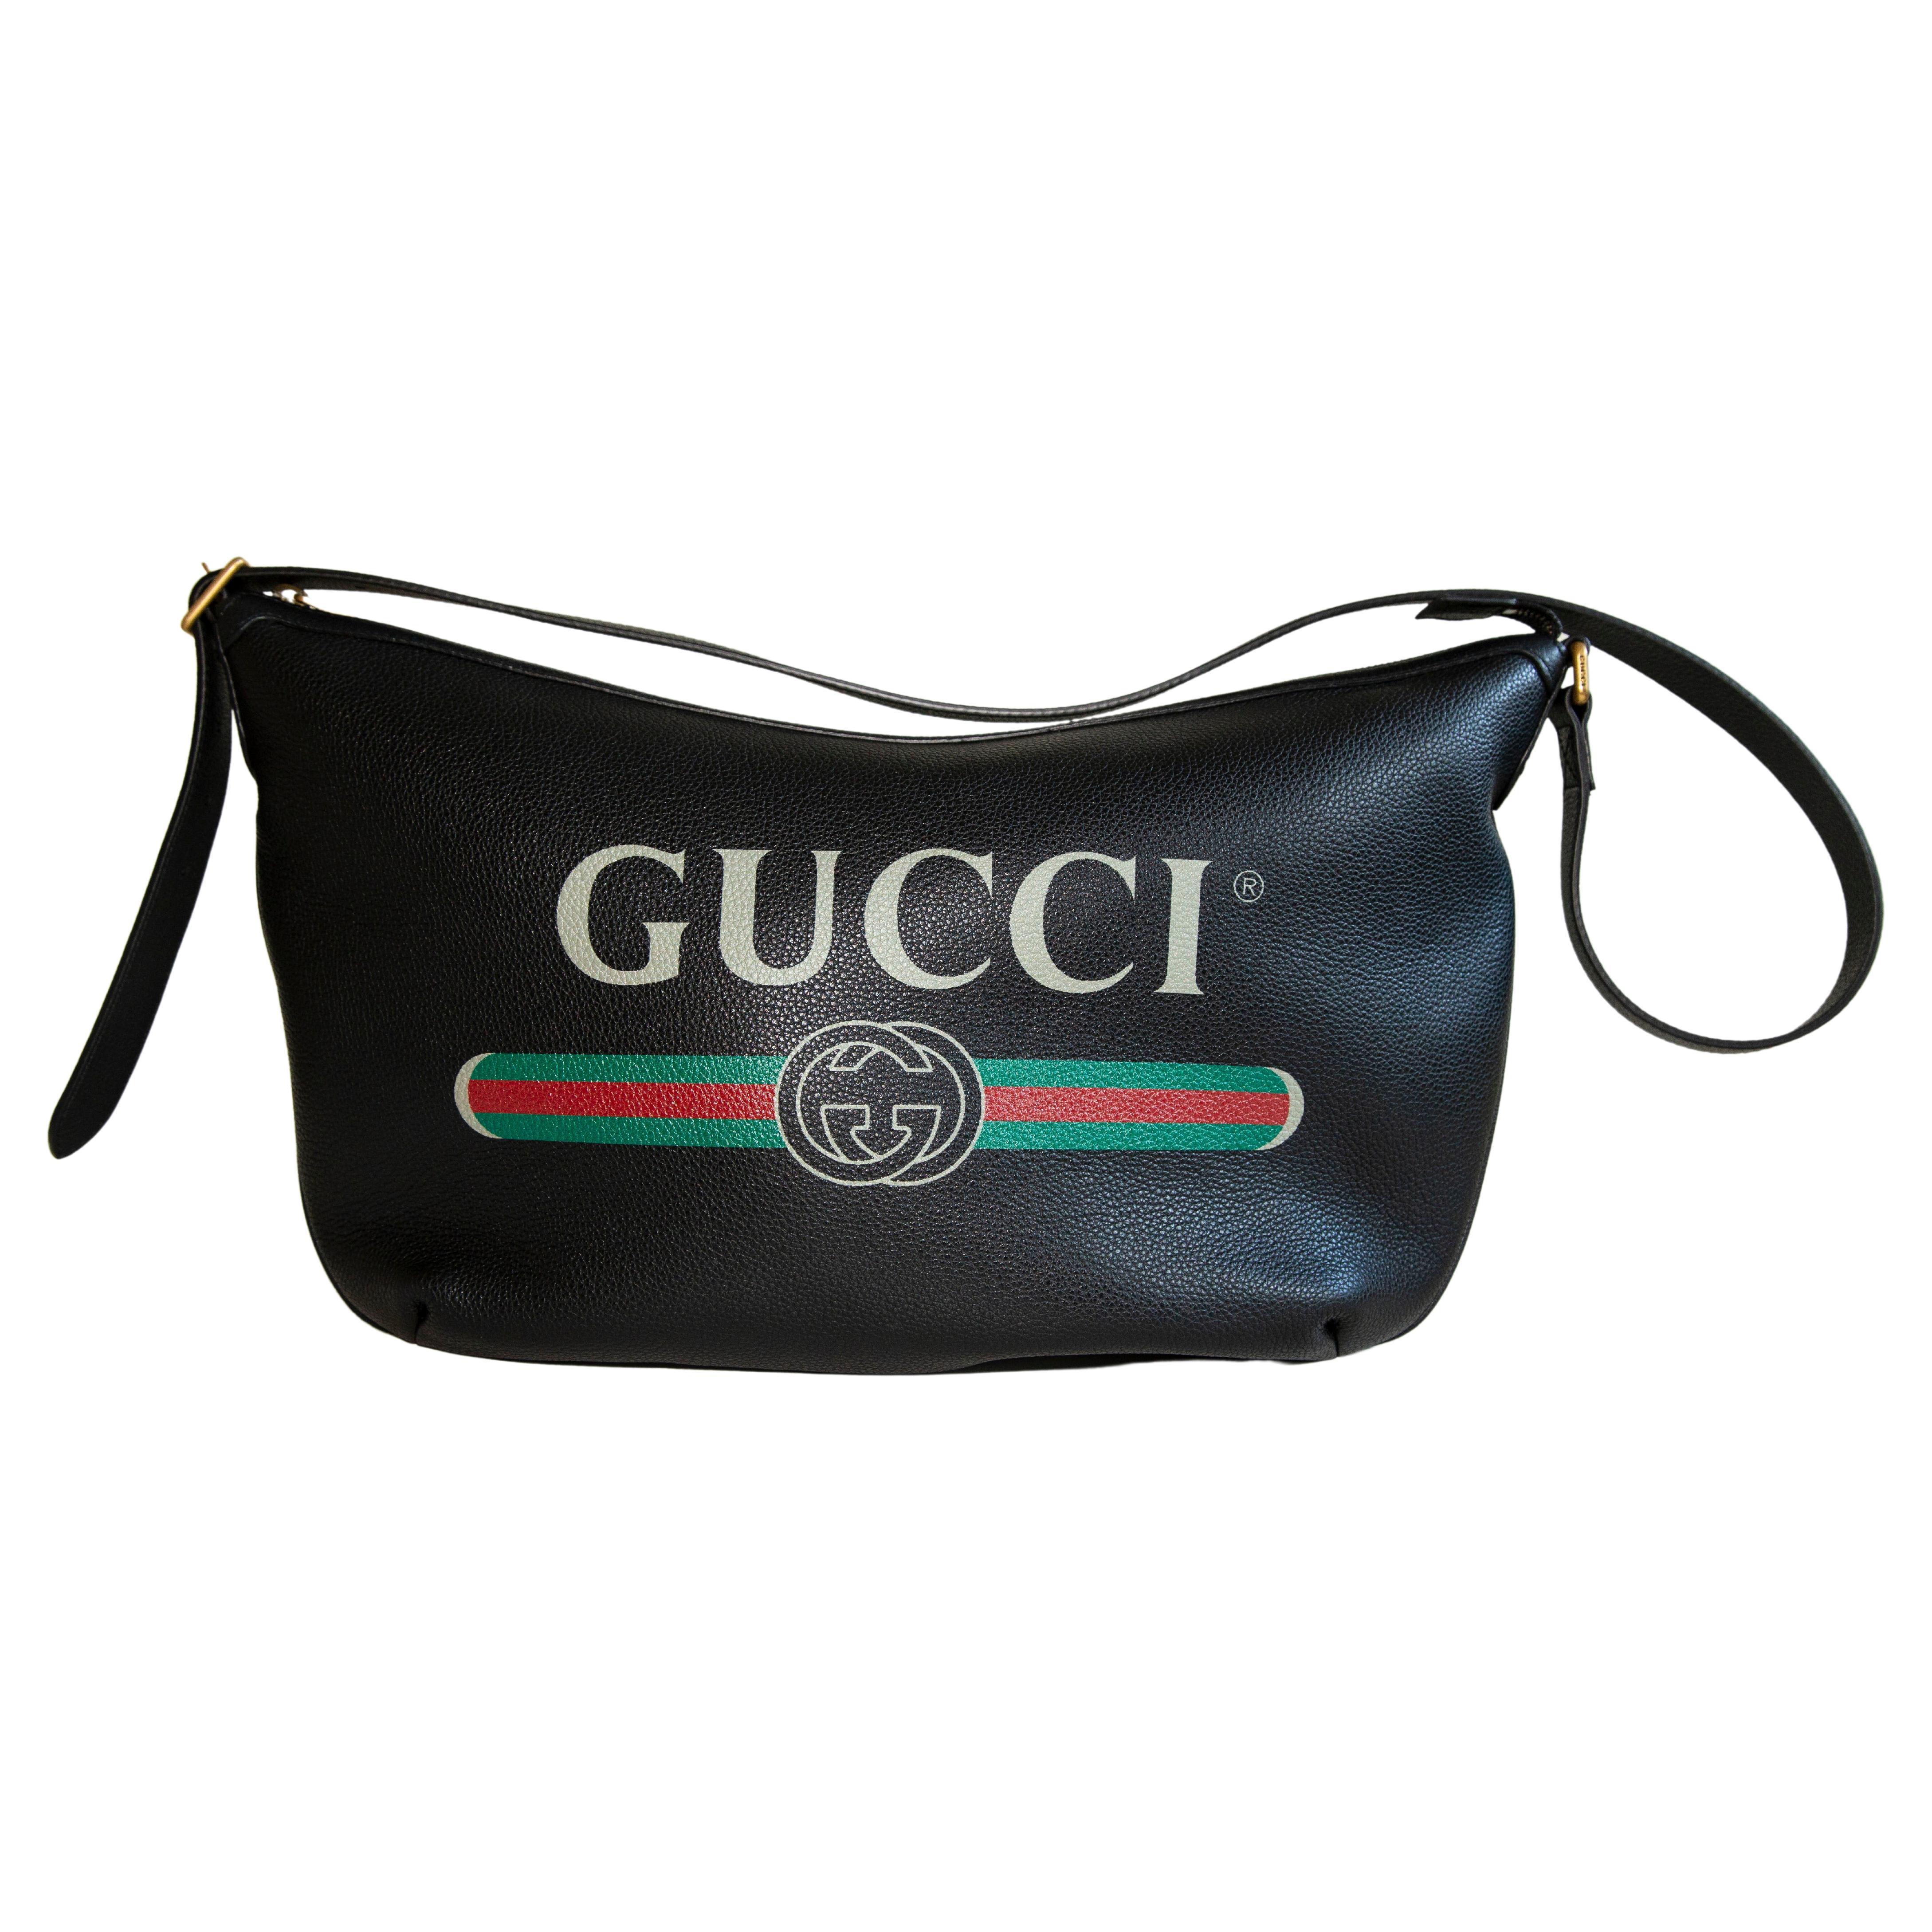 Gucci Print Messenger Bag Vintage Logo Black in Leather with Brass